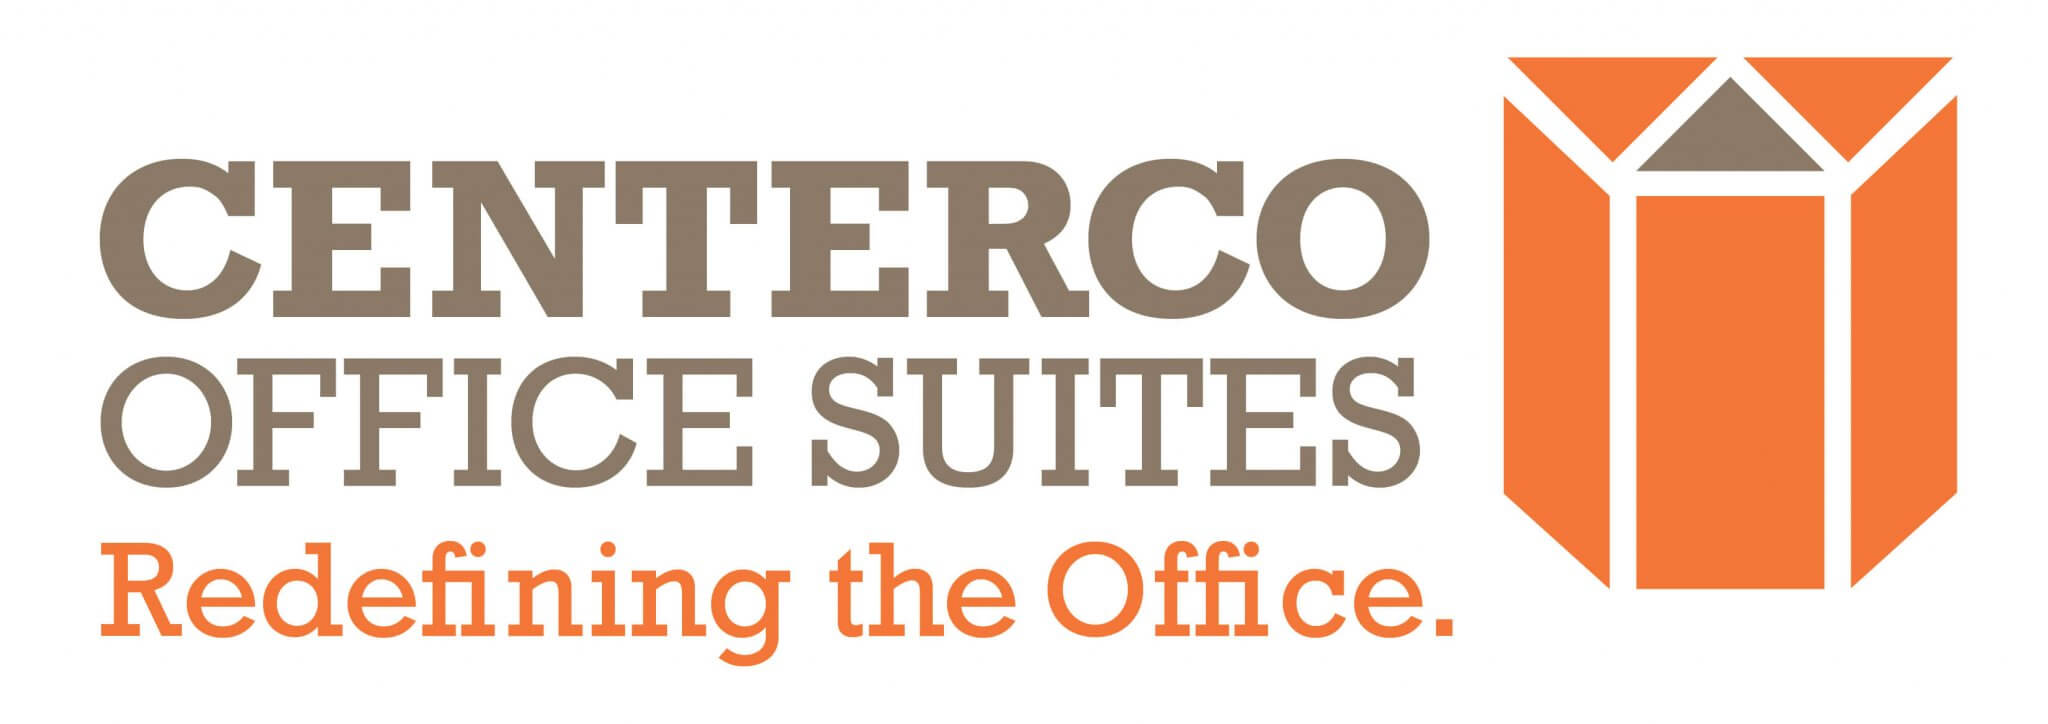 Centerco-Office-Suites-Logo